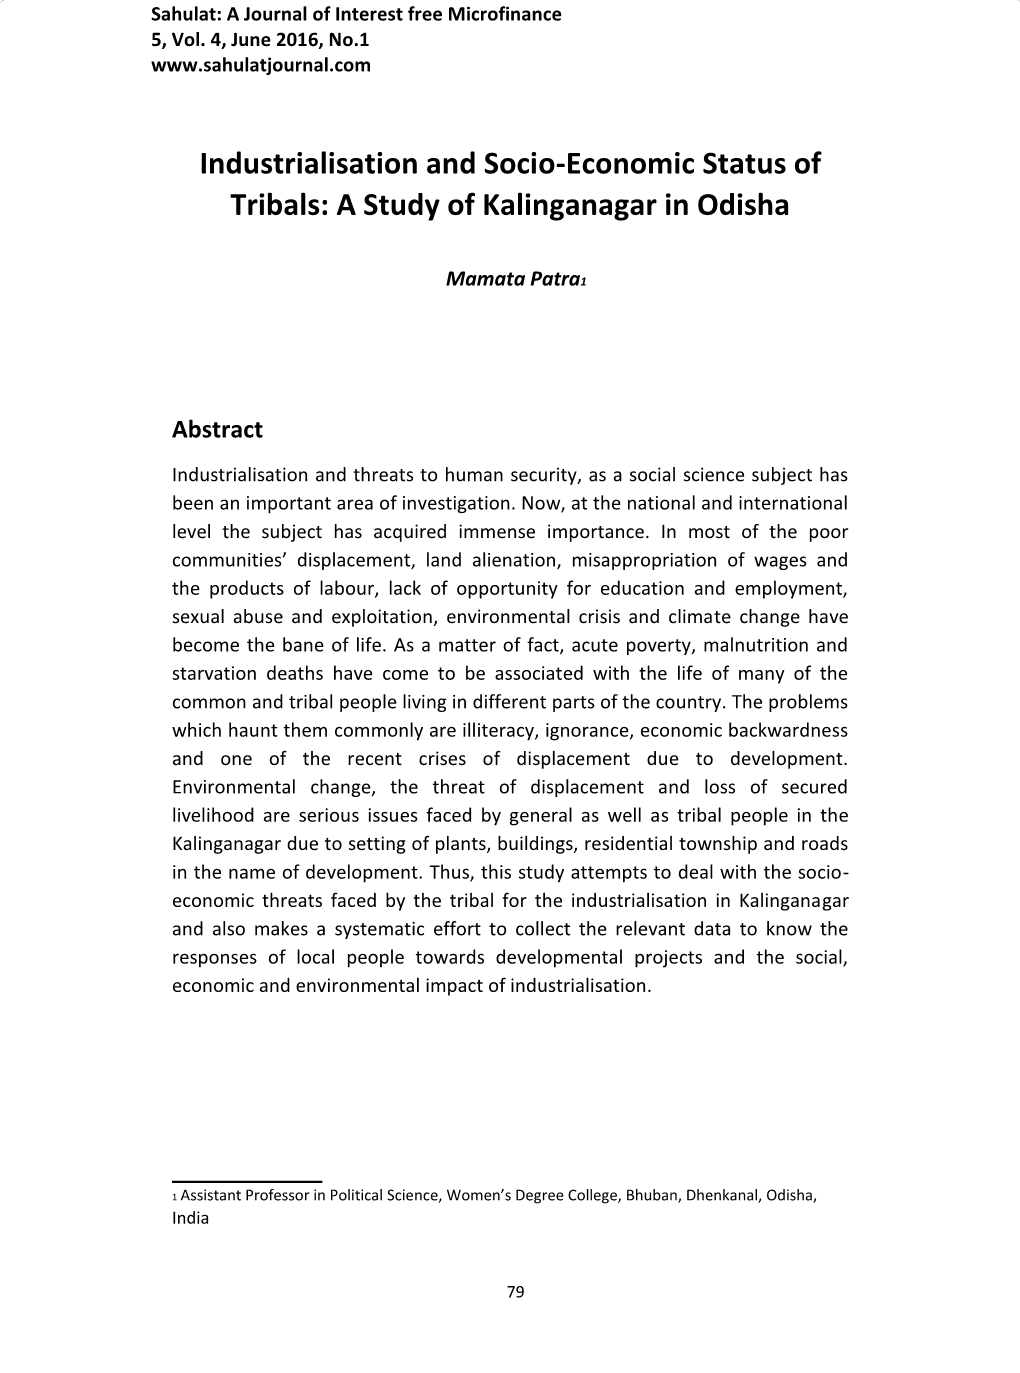 Industrialisation and Socio-Economic Status of Tribals: a Study of Kalinganagar in Odisha